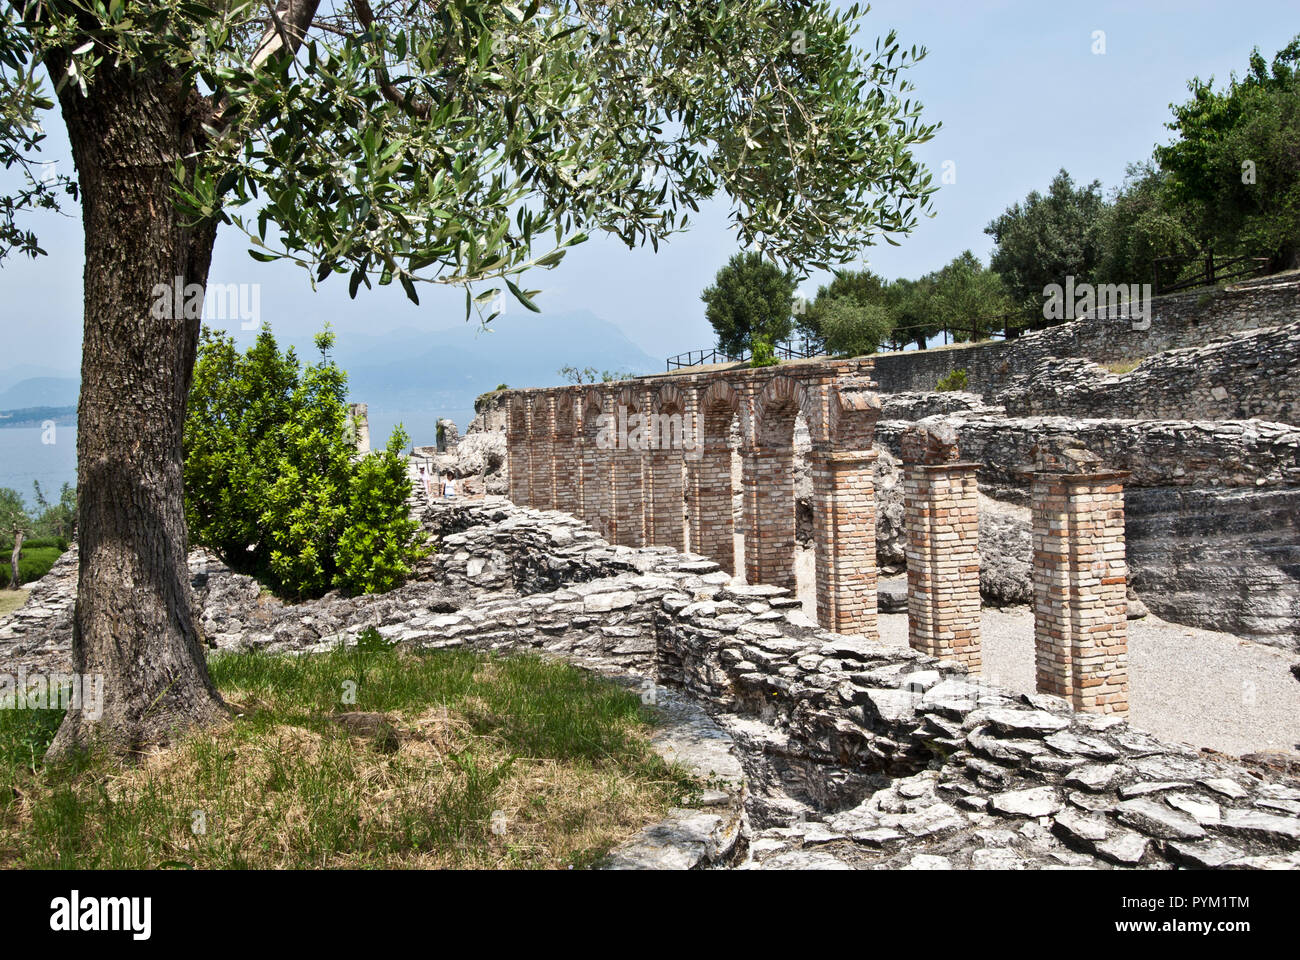 Roman ruins at archaeological site on Sirmione Peninsula, Lake Garda, Italy Stock Photo